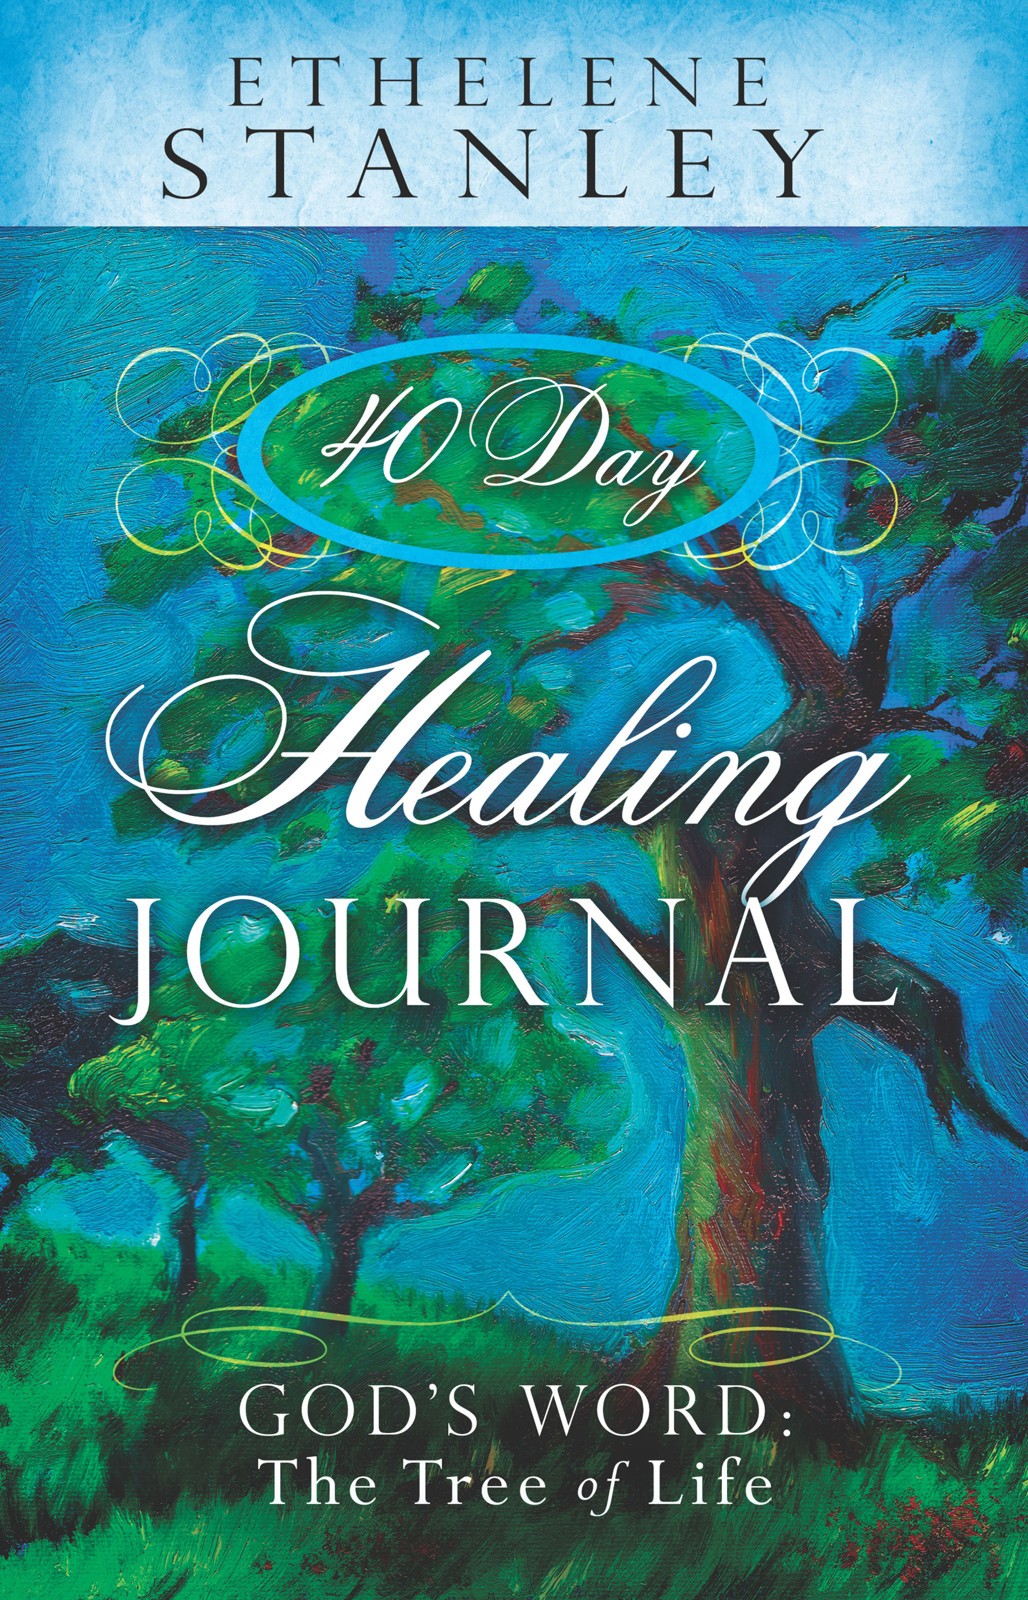 40-Day Healing Journal